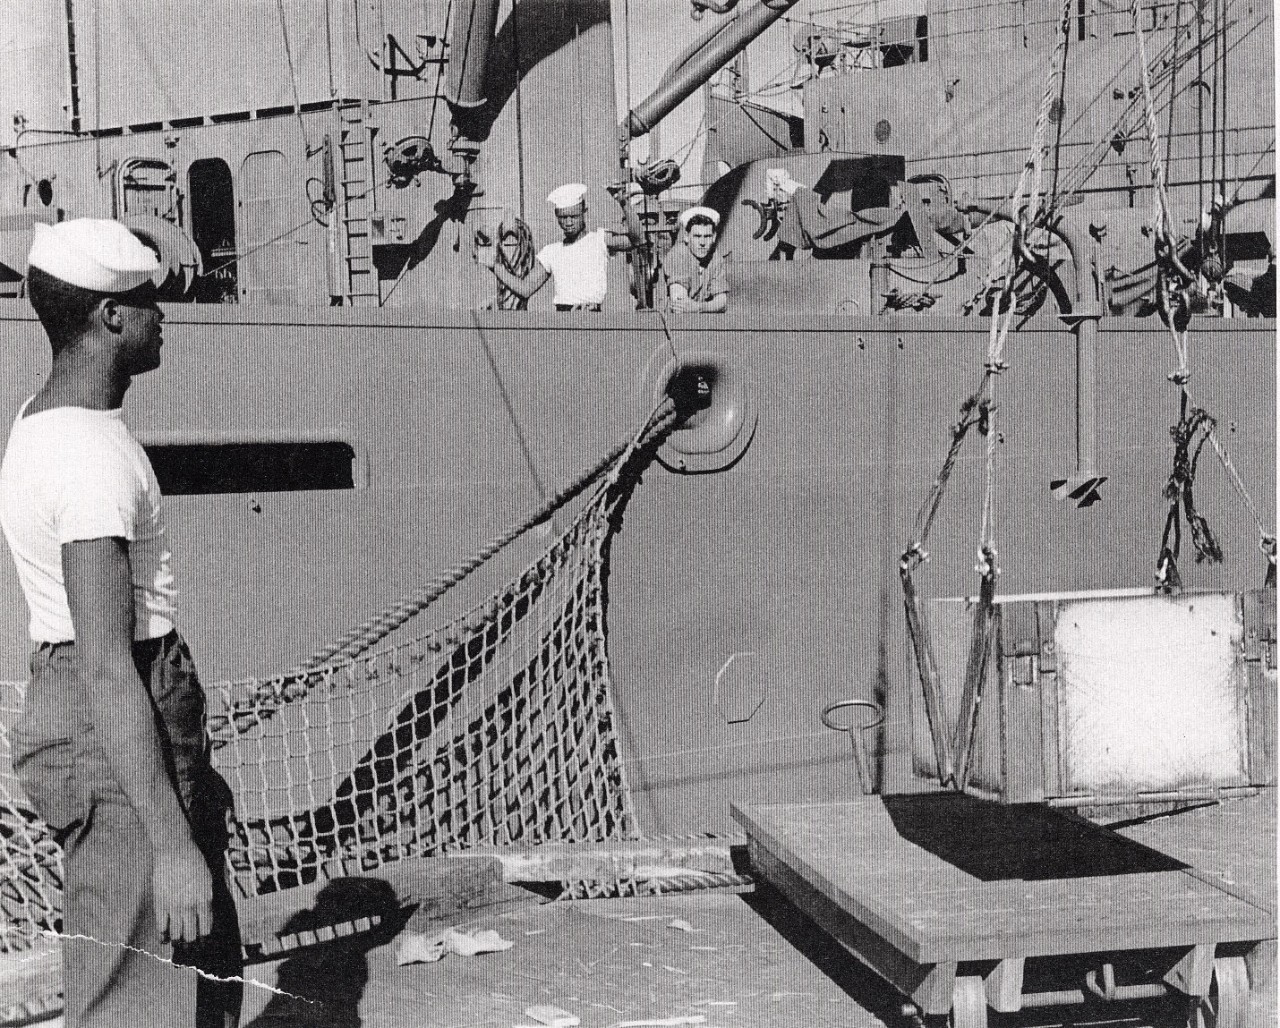 <p>Loading ordnance aboard ship at Port Chicago Naval Magazine, circa 1943/44.</p>
